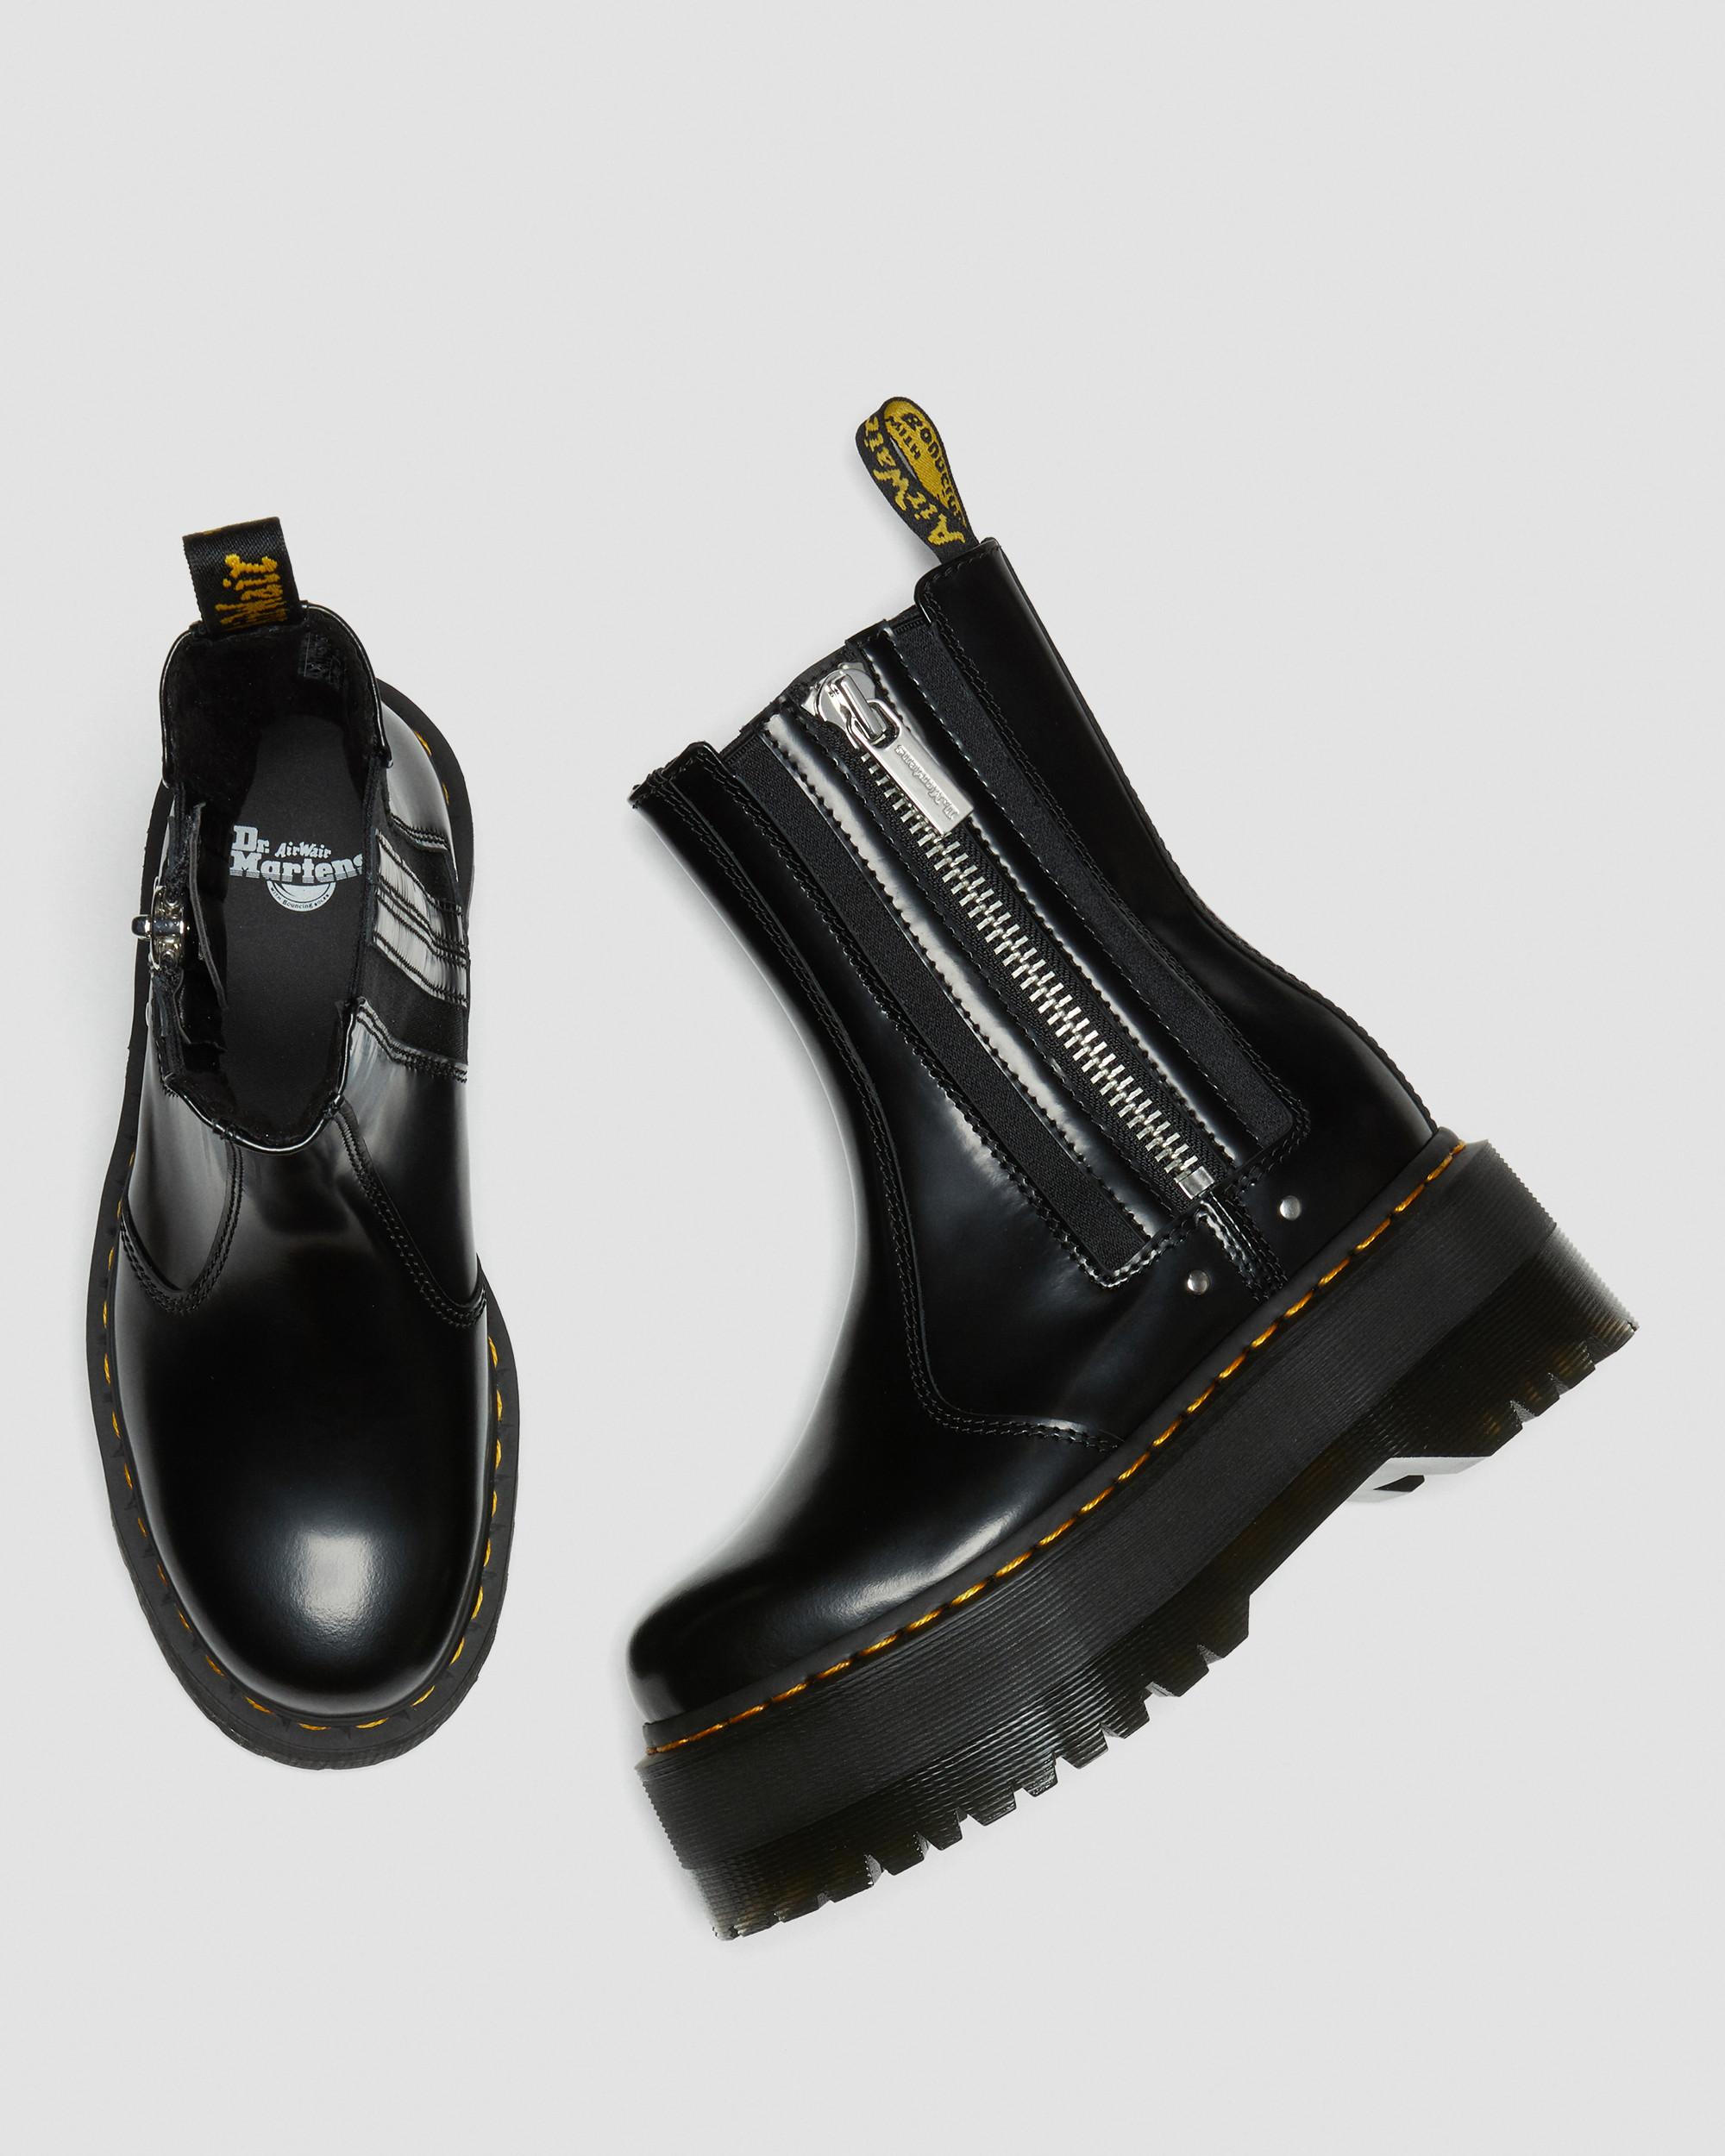 https://i1.adis.ws/i/drmartens/26903001.88.jpg?$large$2976 Max Leather Platform Chelsea Boots Dr. Martens